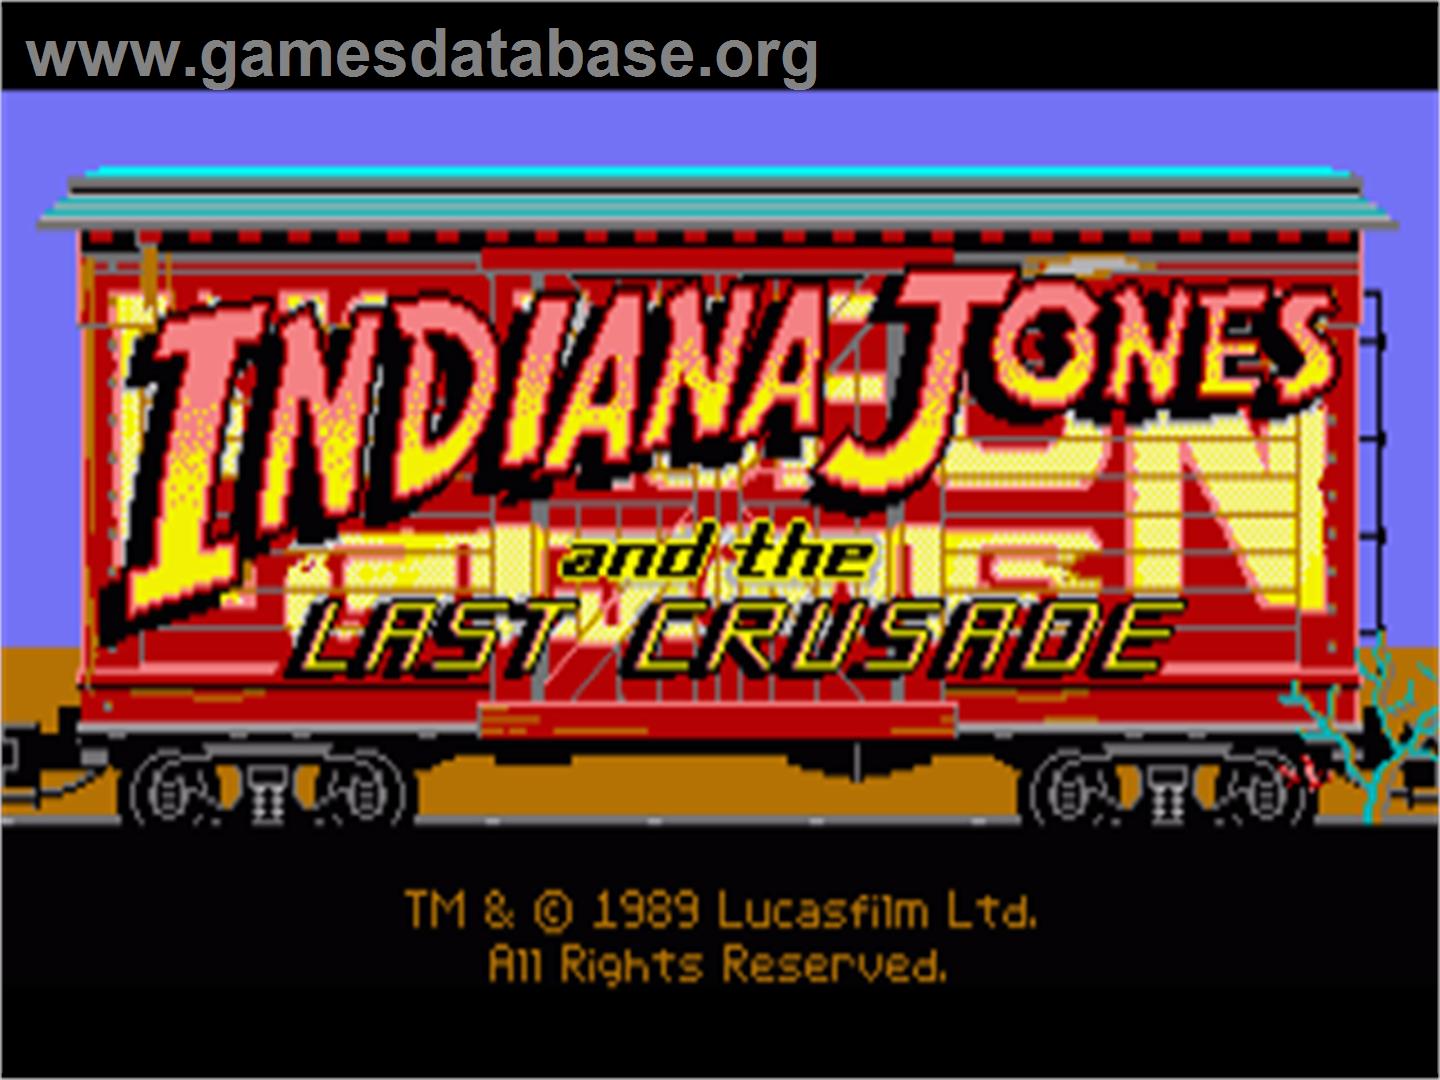 Indiana Jones and the Last Crusade: The Graphic Adventure - Commodore Amiga - Artwork - Title Screen